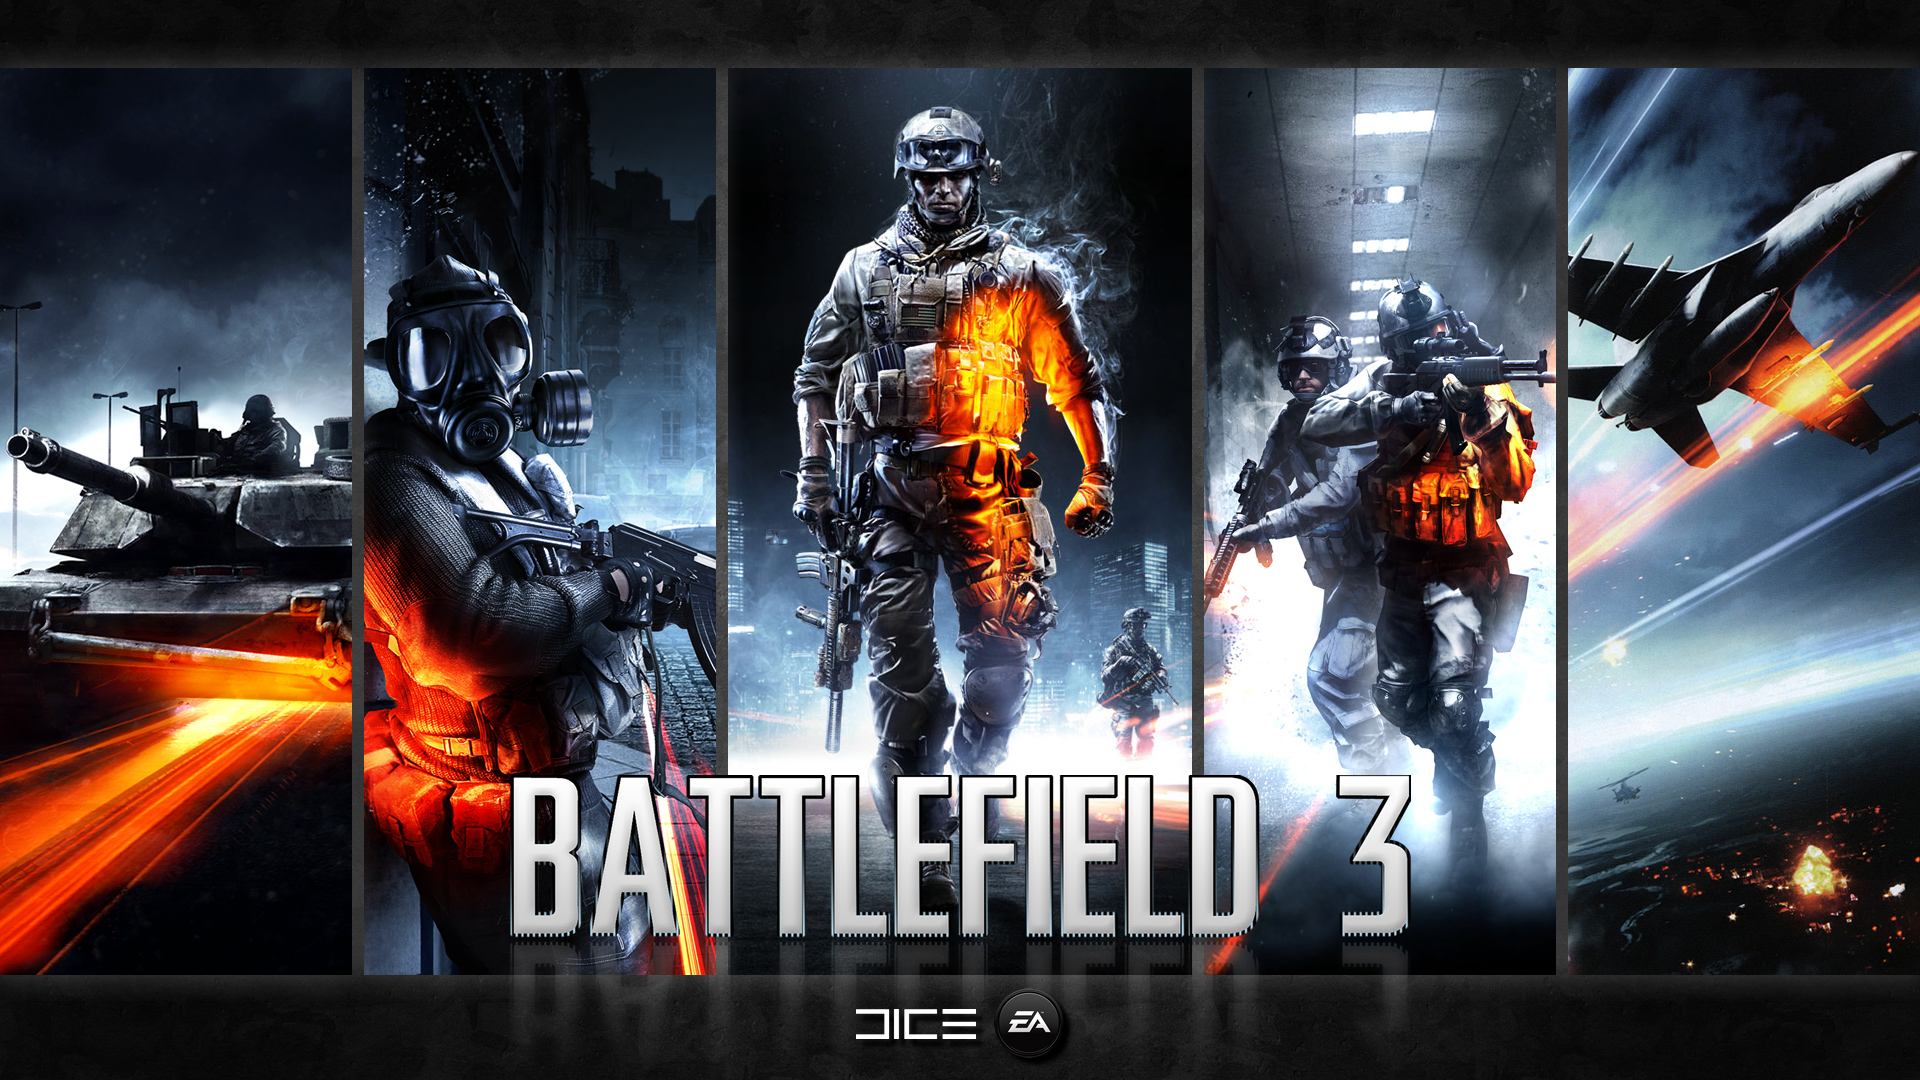 Battlefield V Wallpaper 4K, PlayStation 4, Xbox One, PC Games, #1276